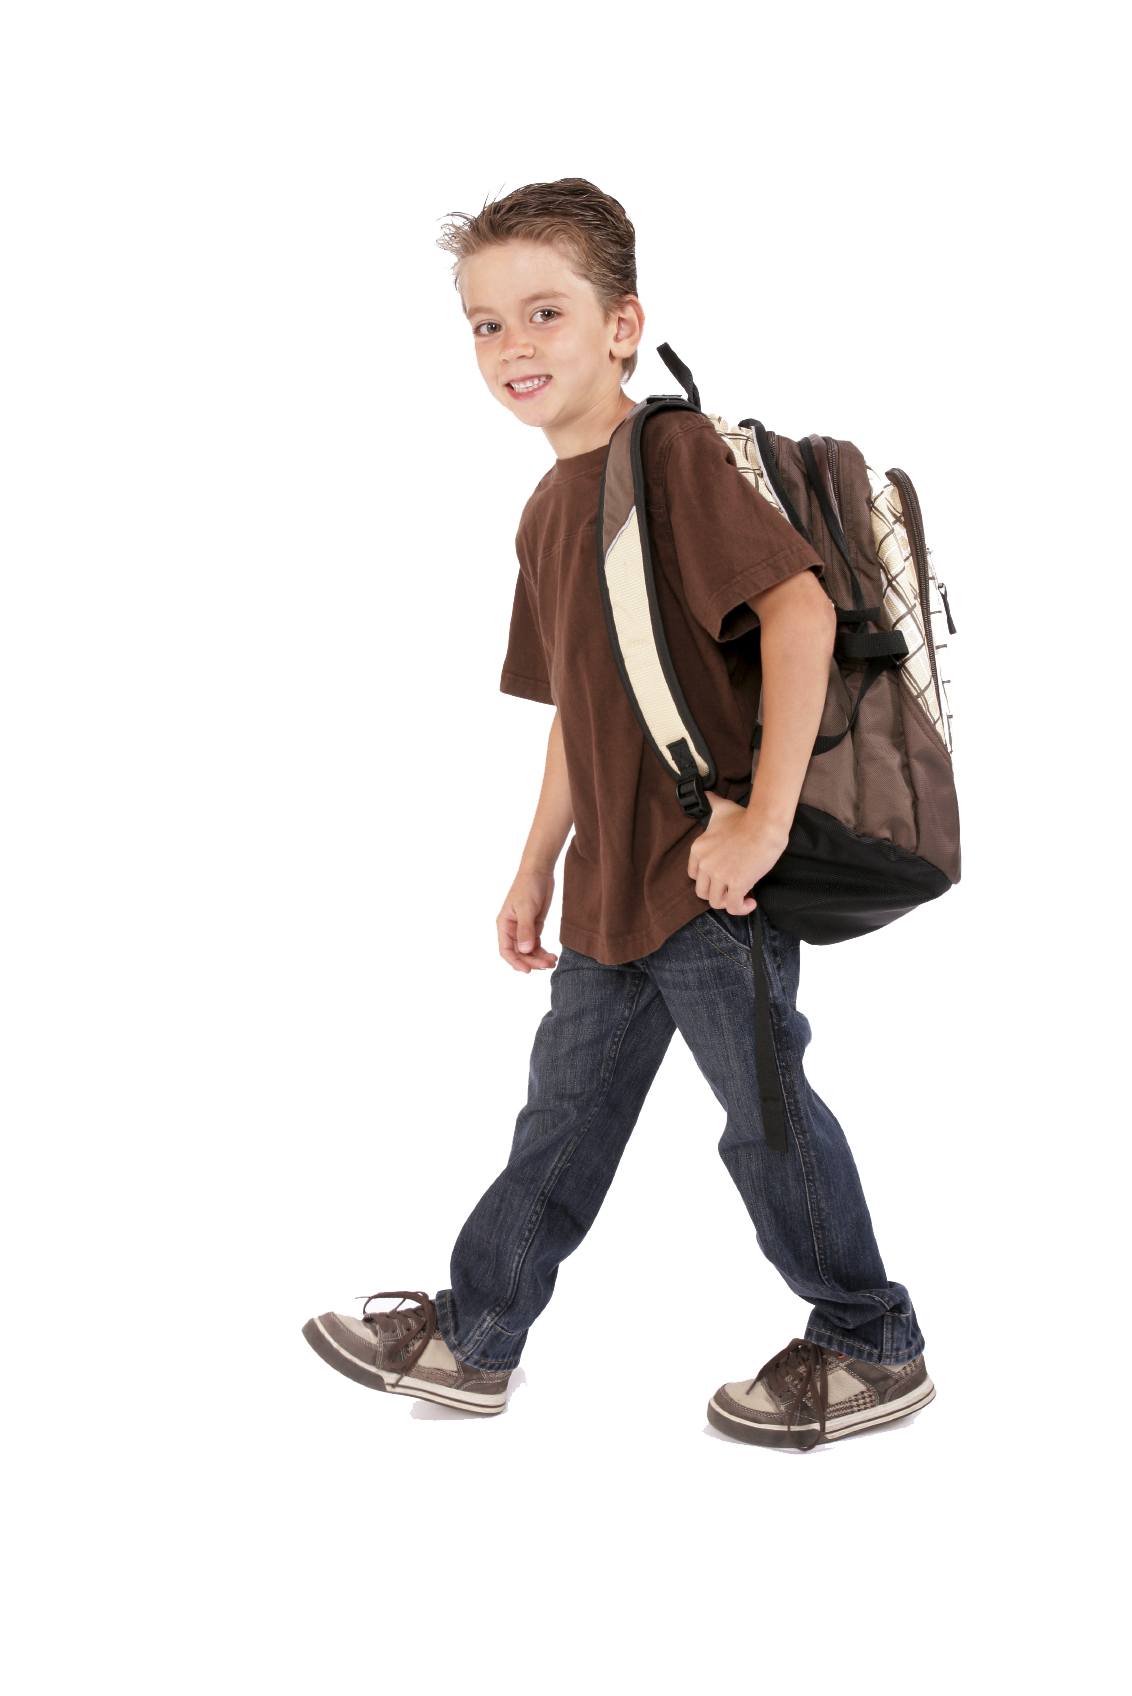 Backpack Boy – GED Preparation